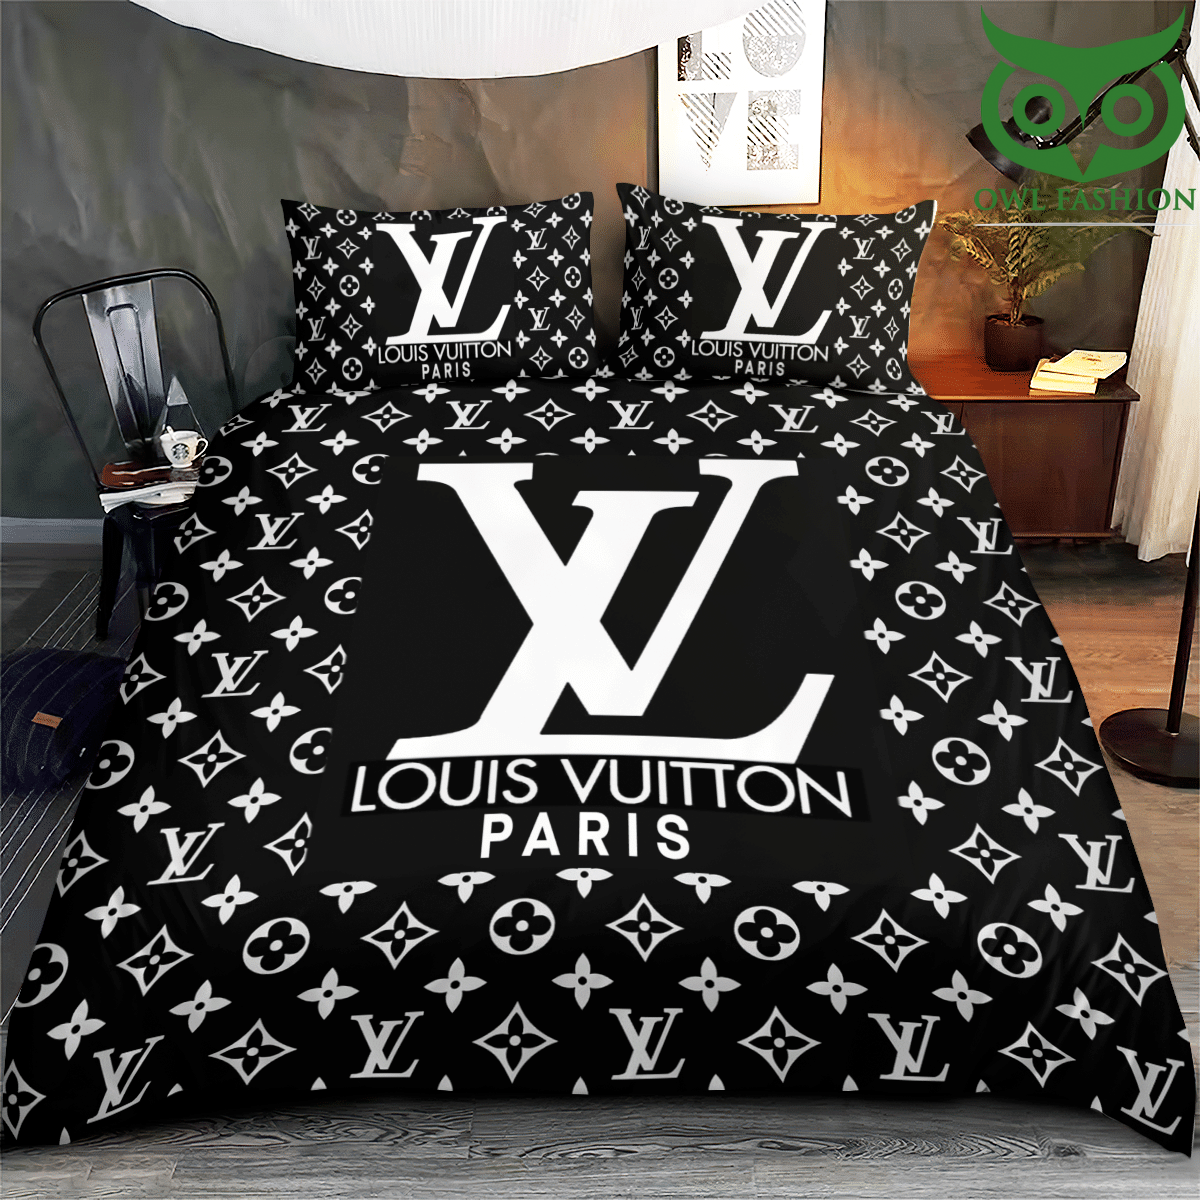 53 LUXURY Louis Vuitton basic logo black bedding set